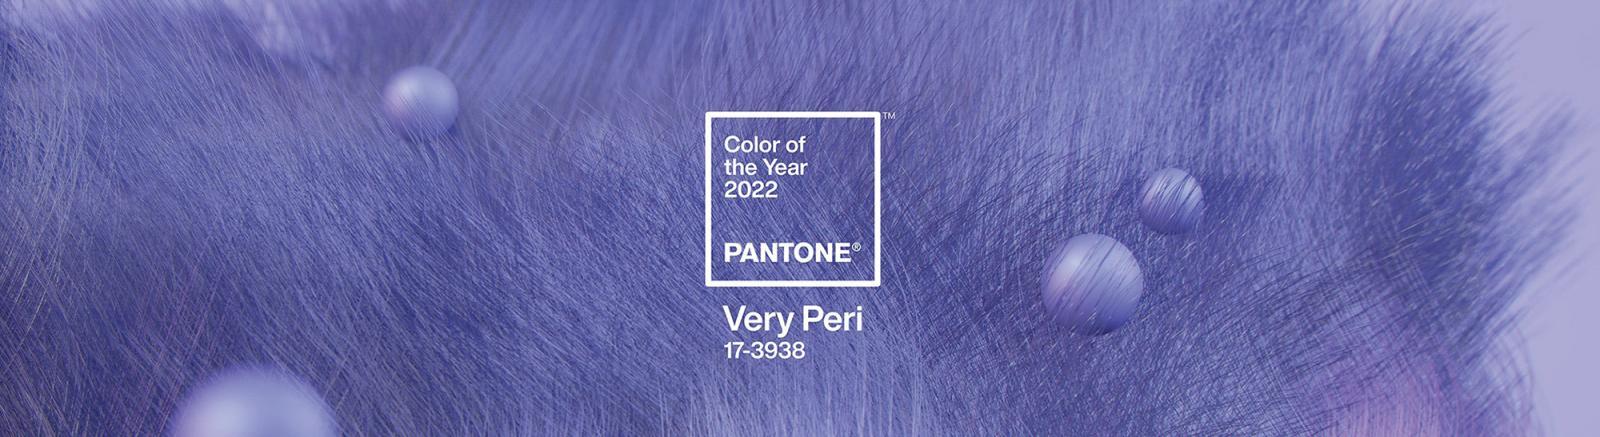 Pantone creates 2022 Colour of the Year